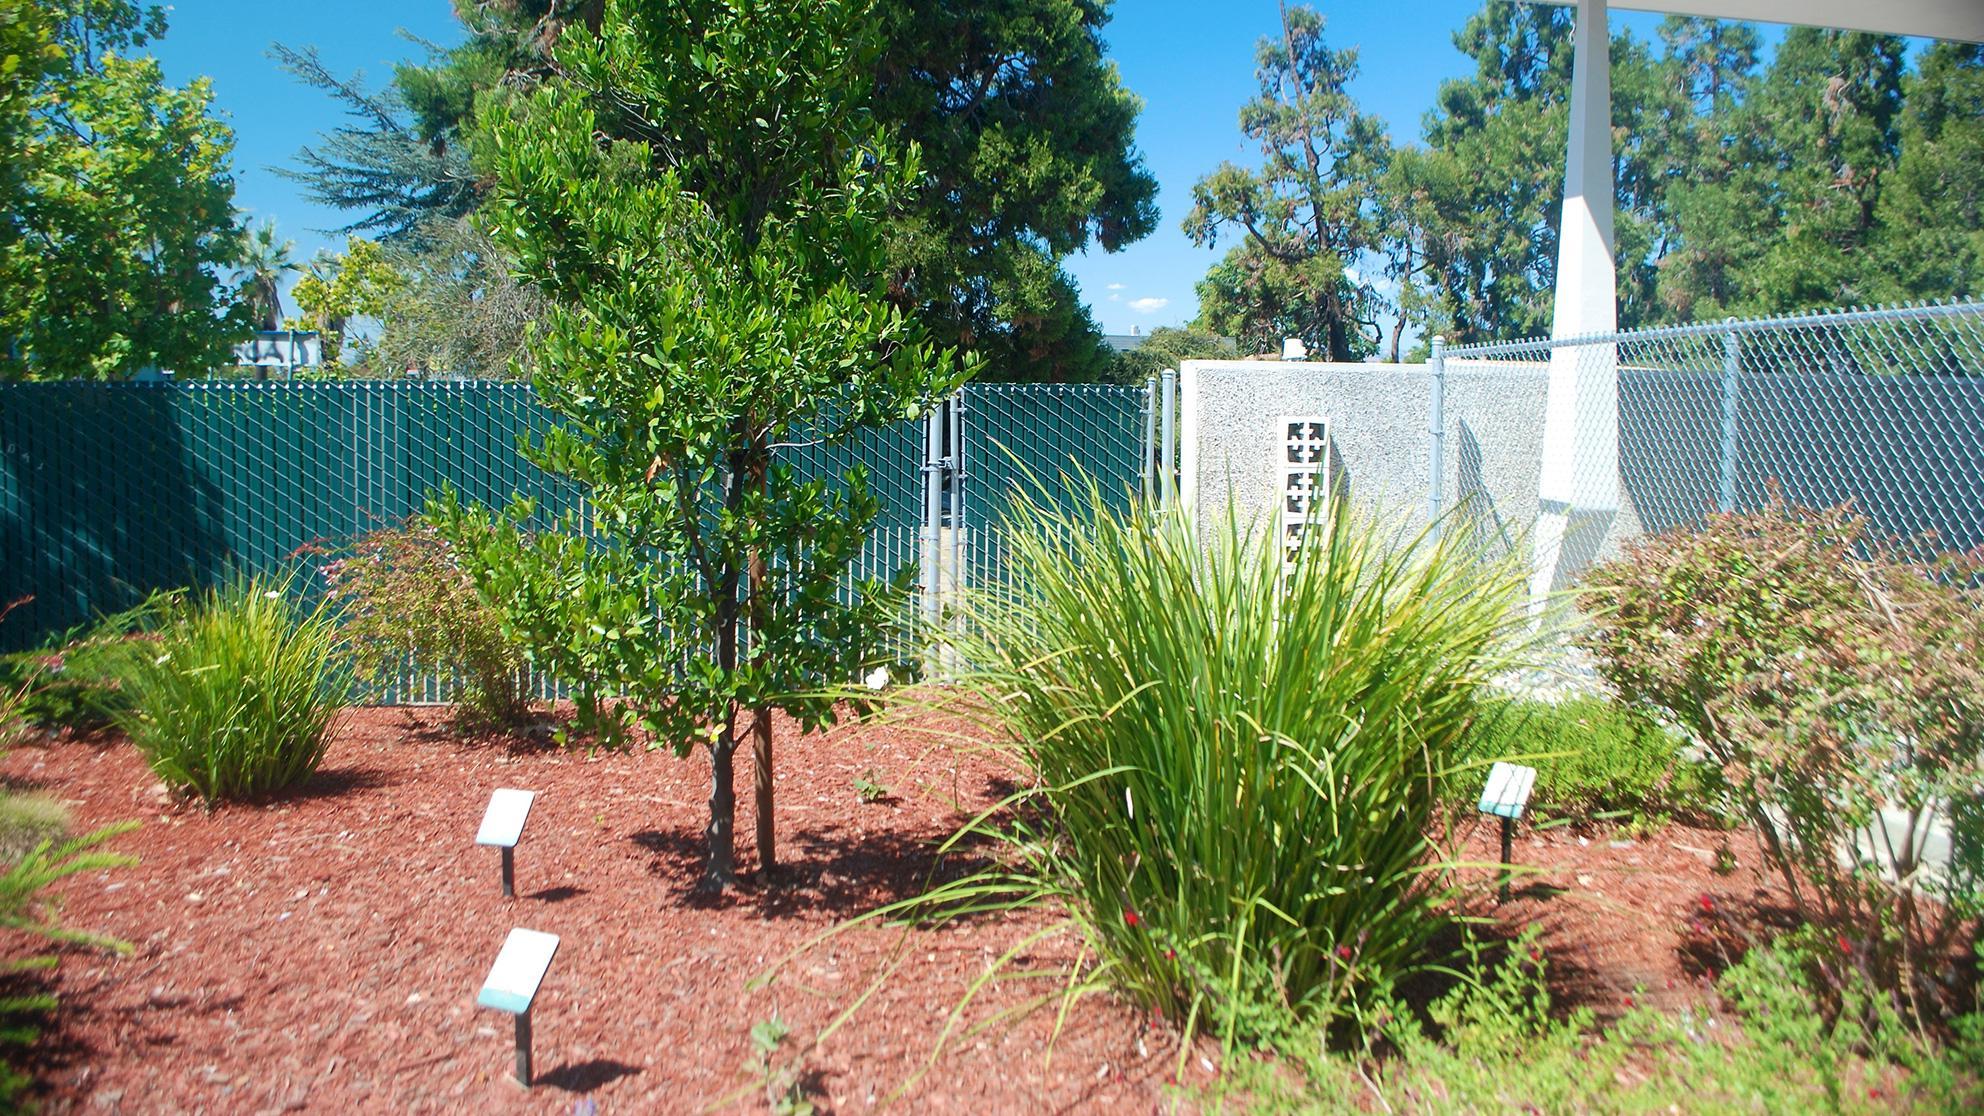 Image of the San Jose Water demonstration garden